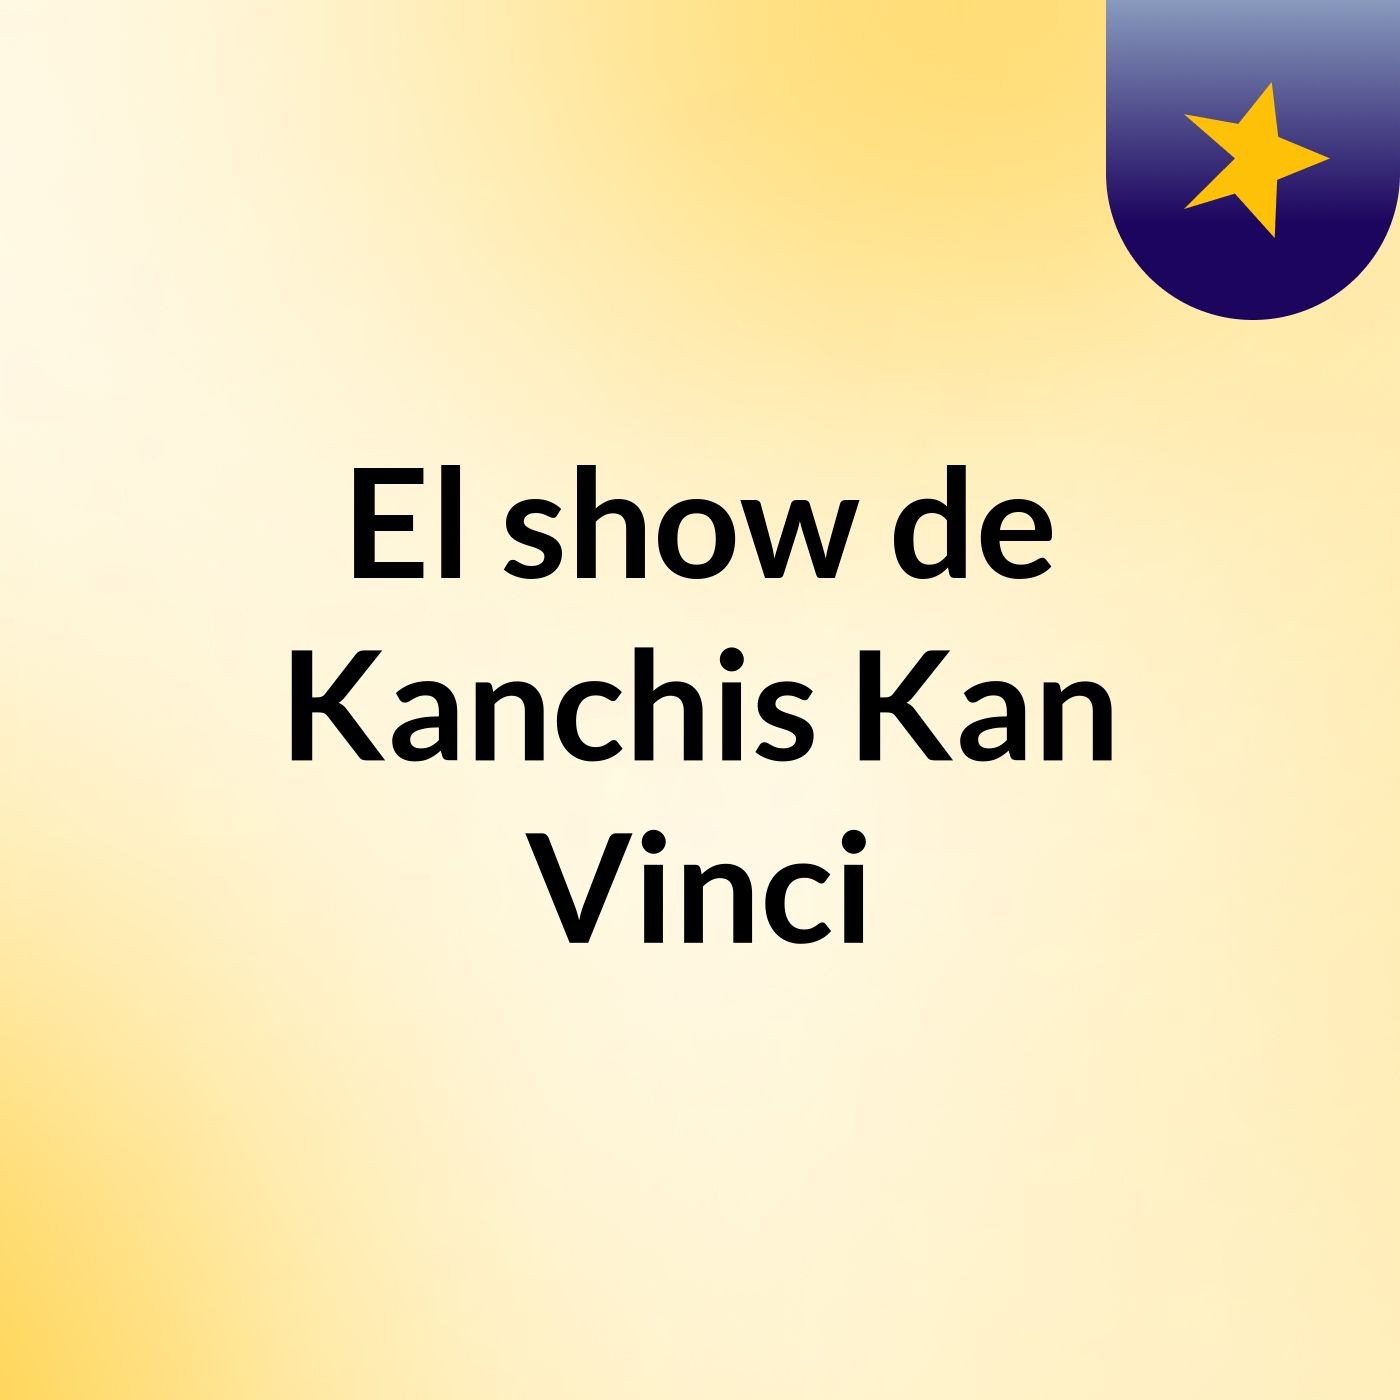 El show de Kanchis Kan Vinci